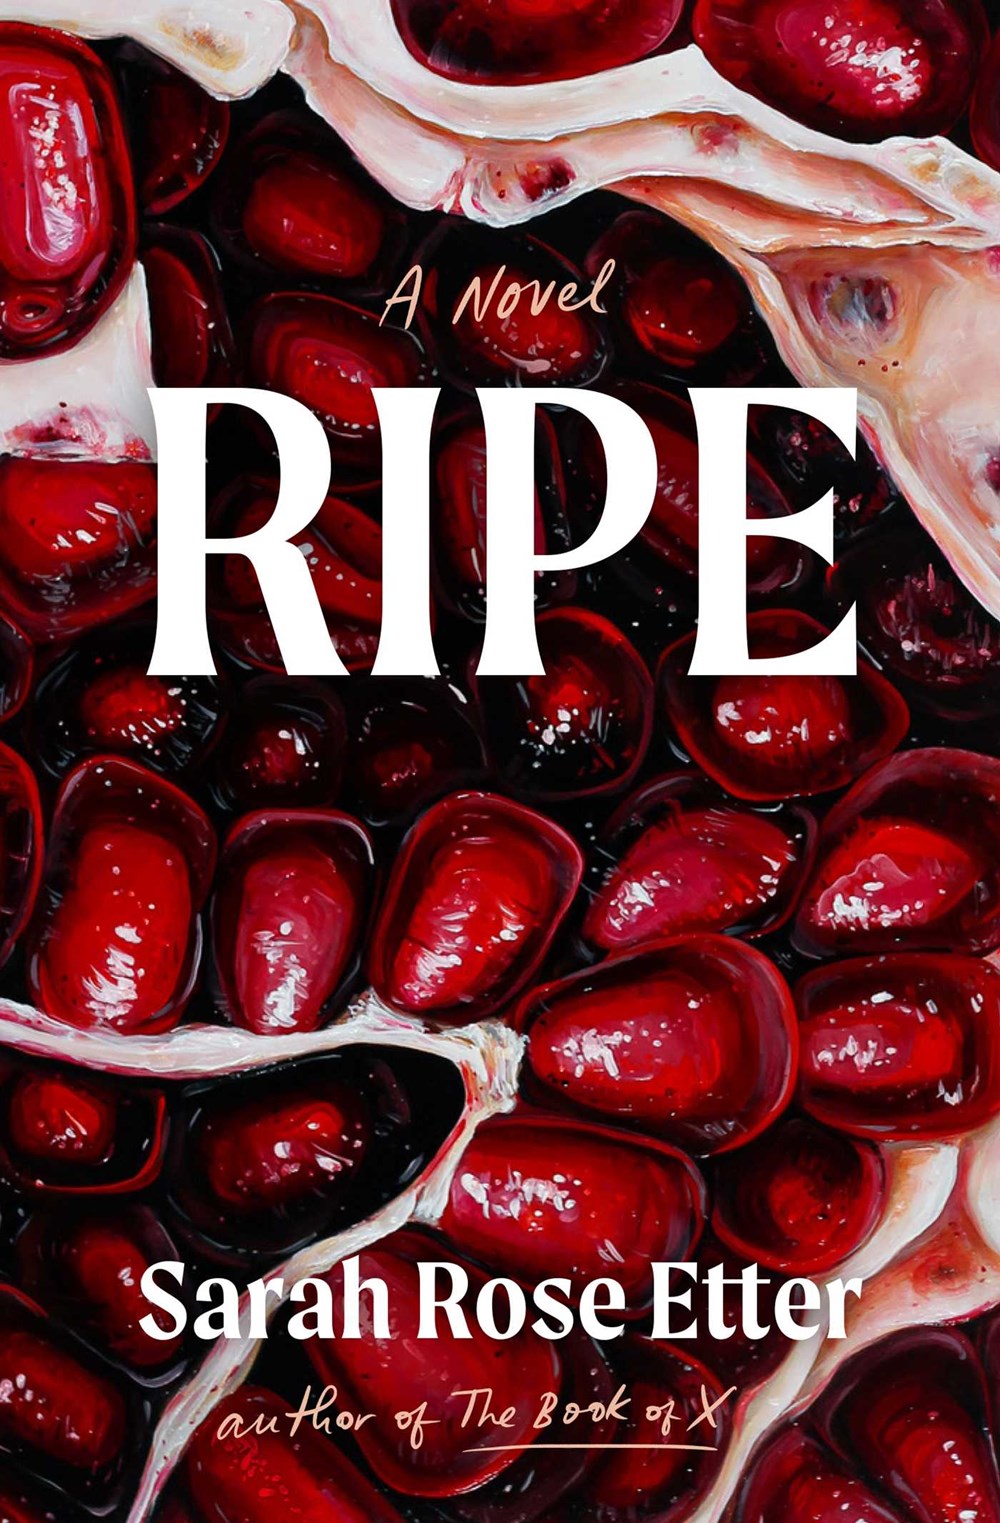 Ripe by Sarah Rose Etter